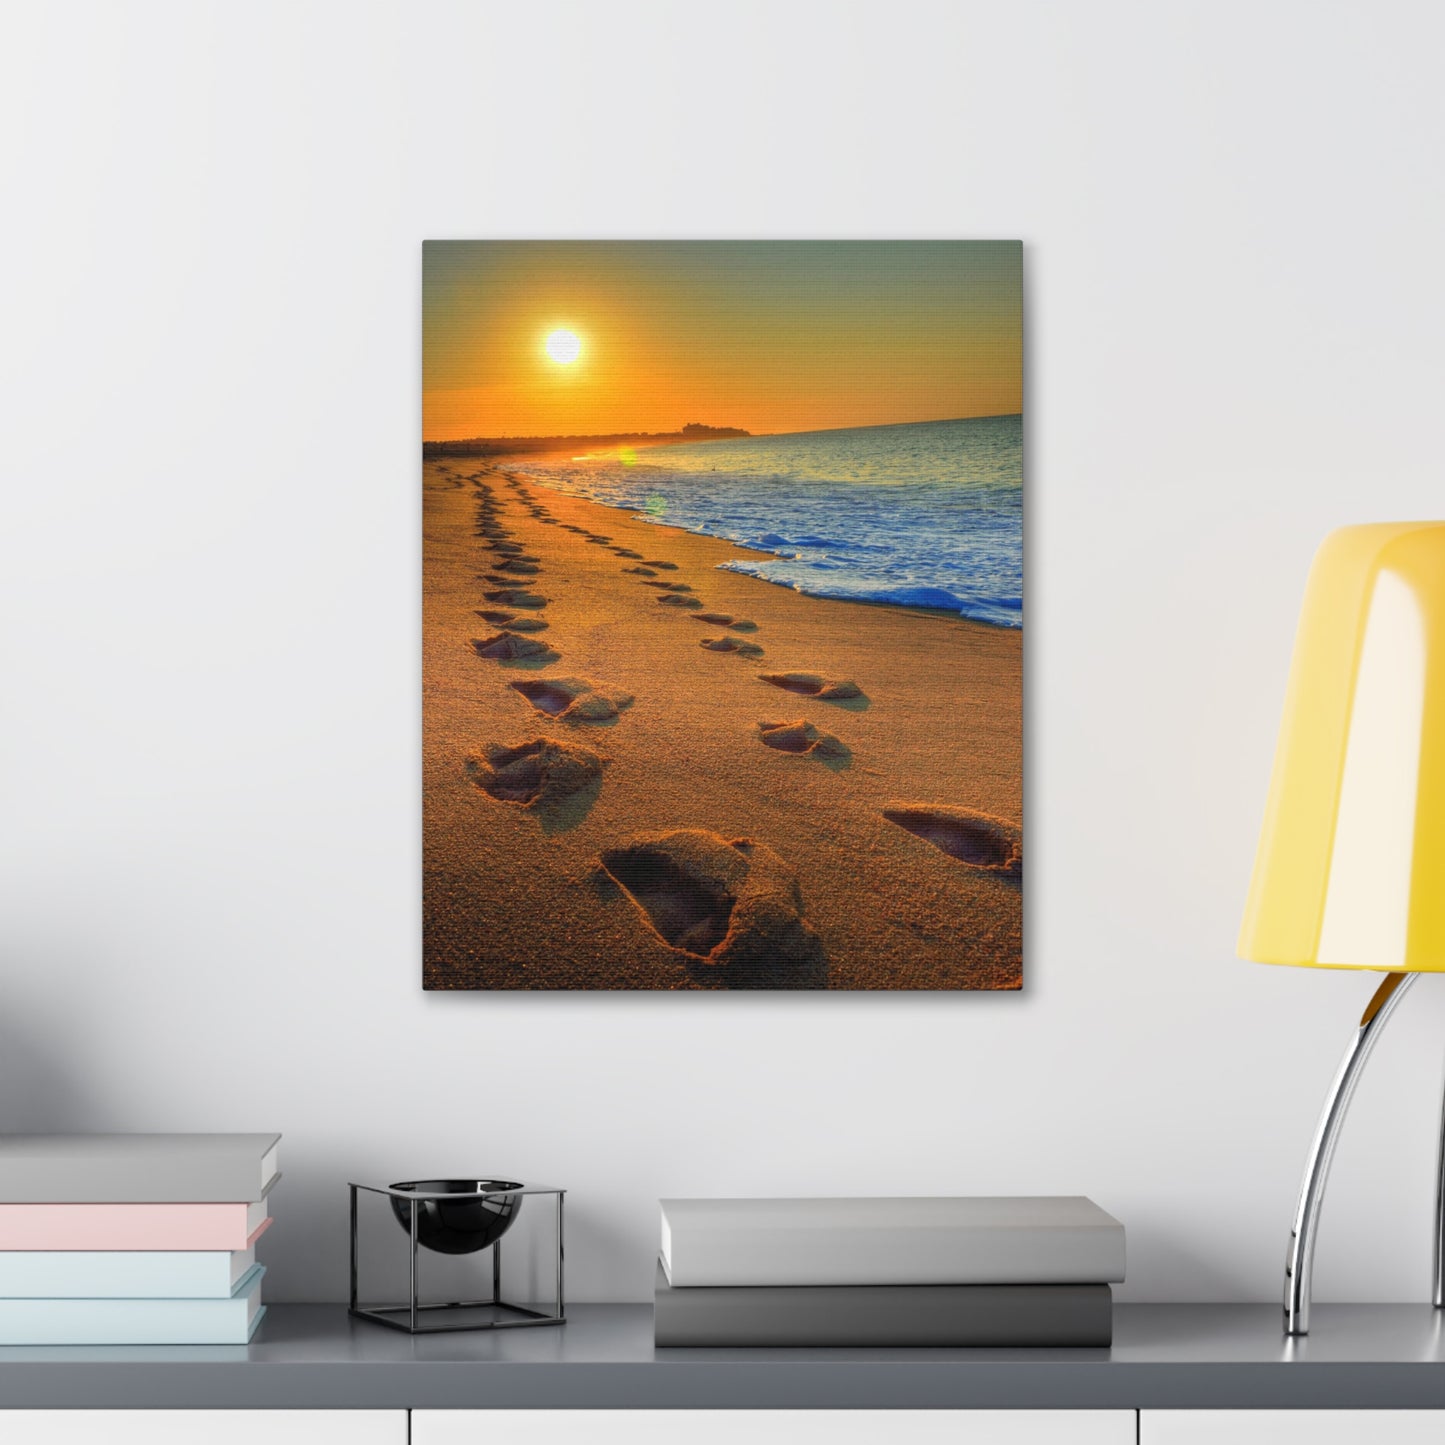 Canvas Print Of A Sunrise On The Beach For Wall Art